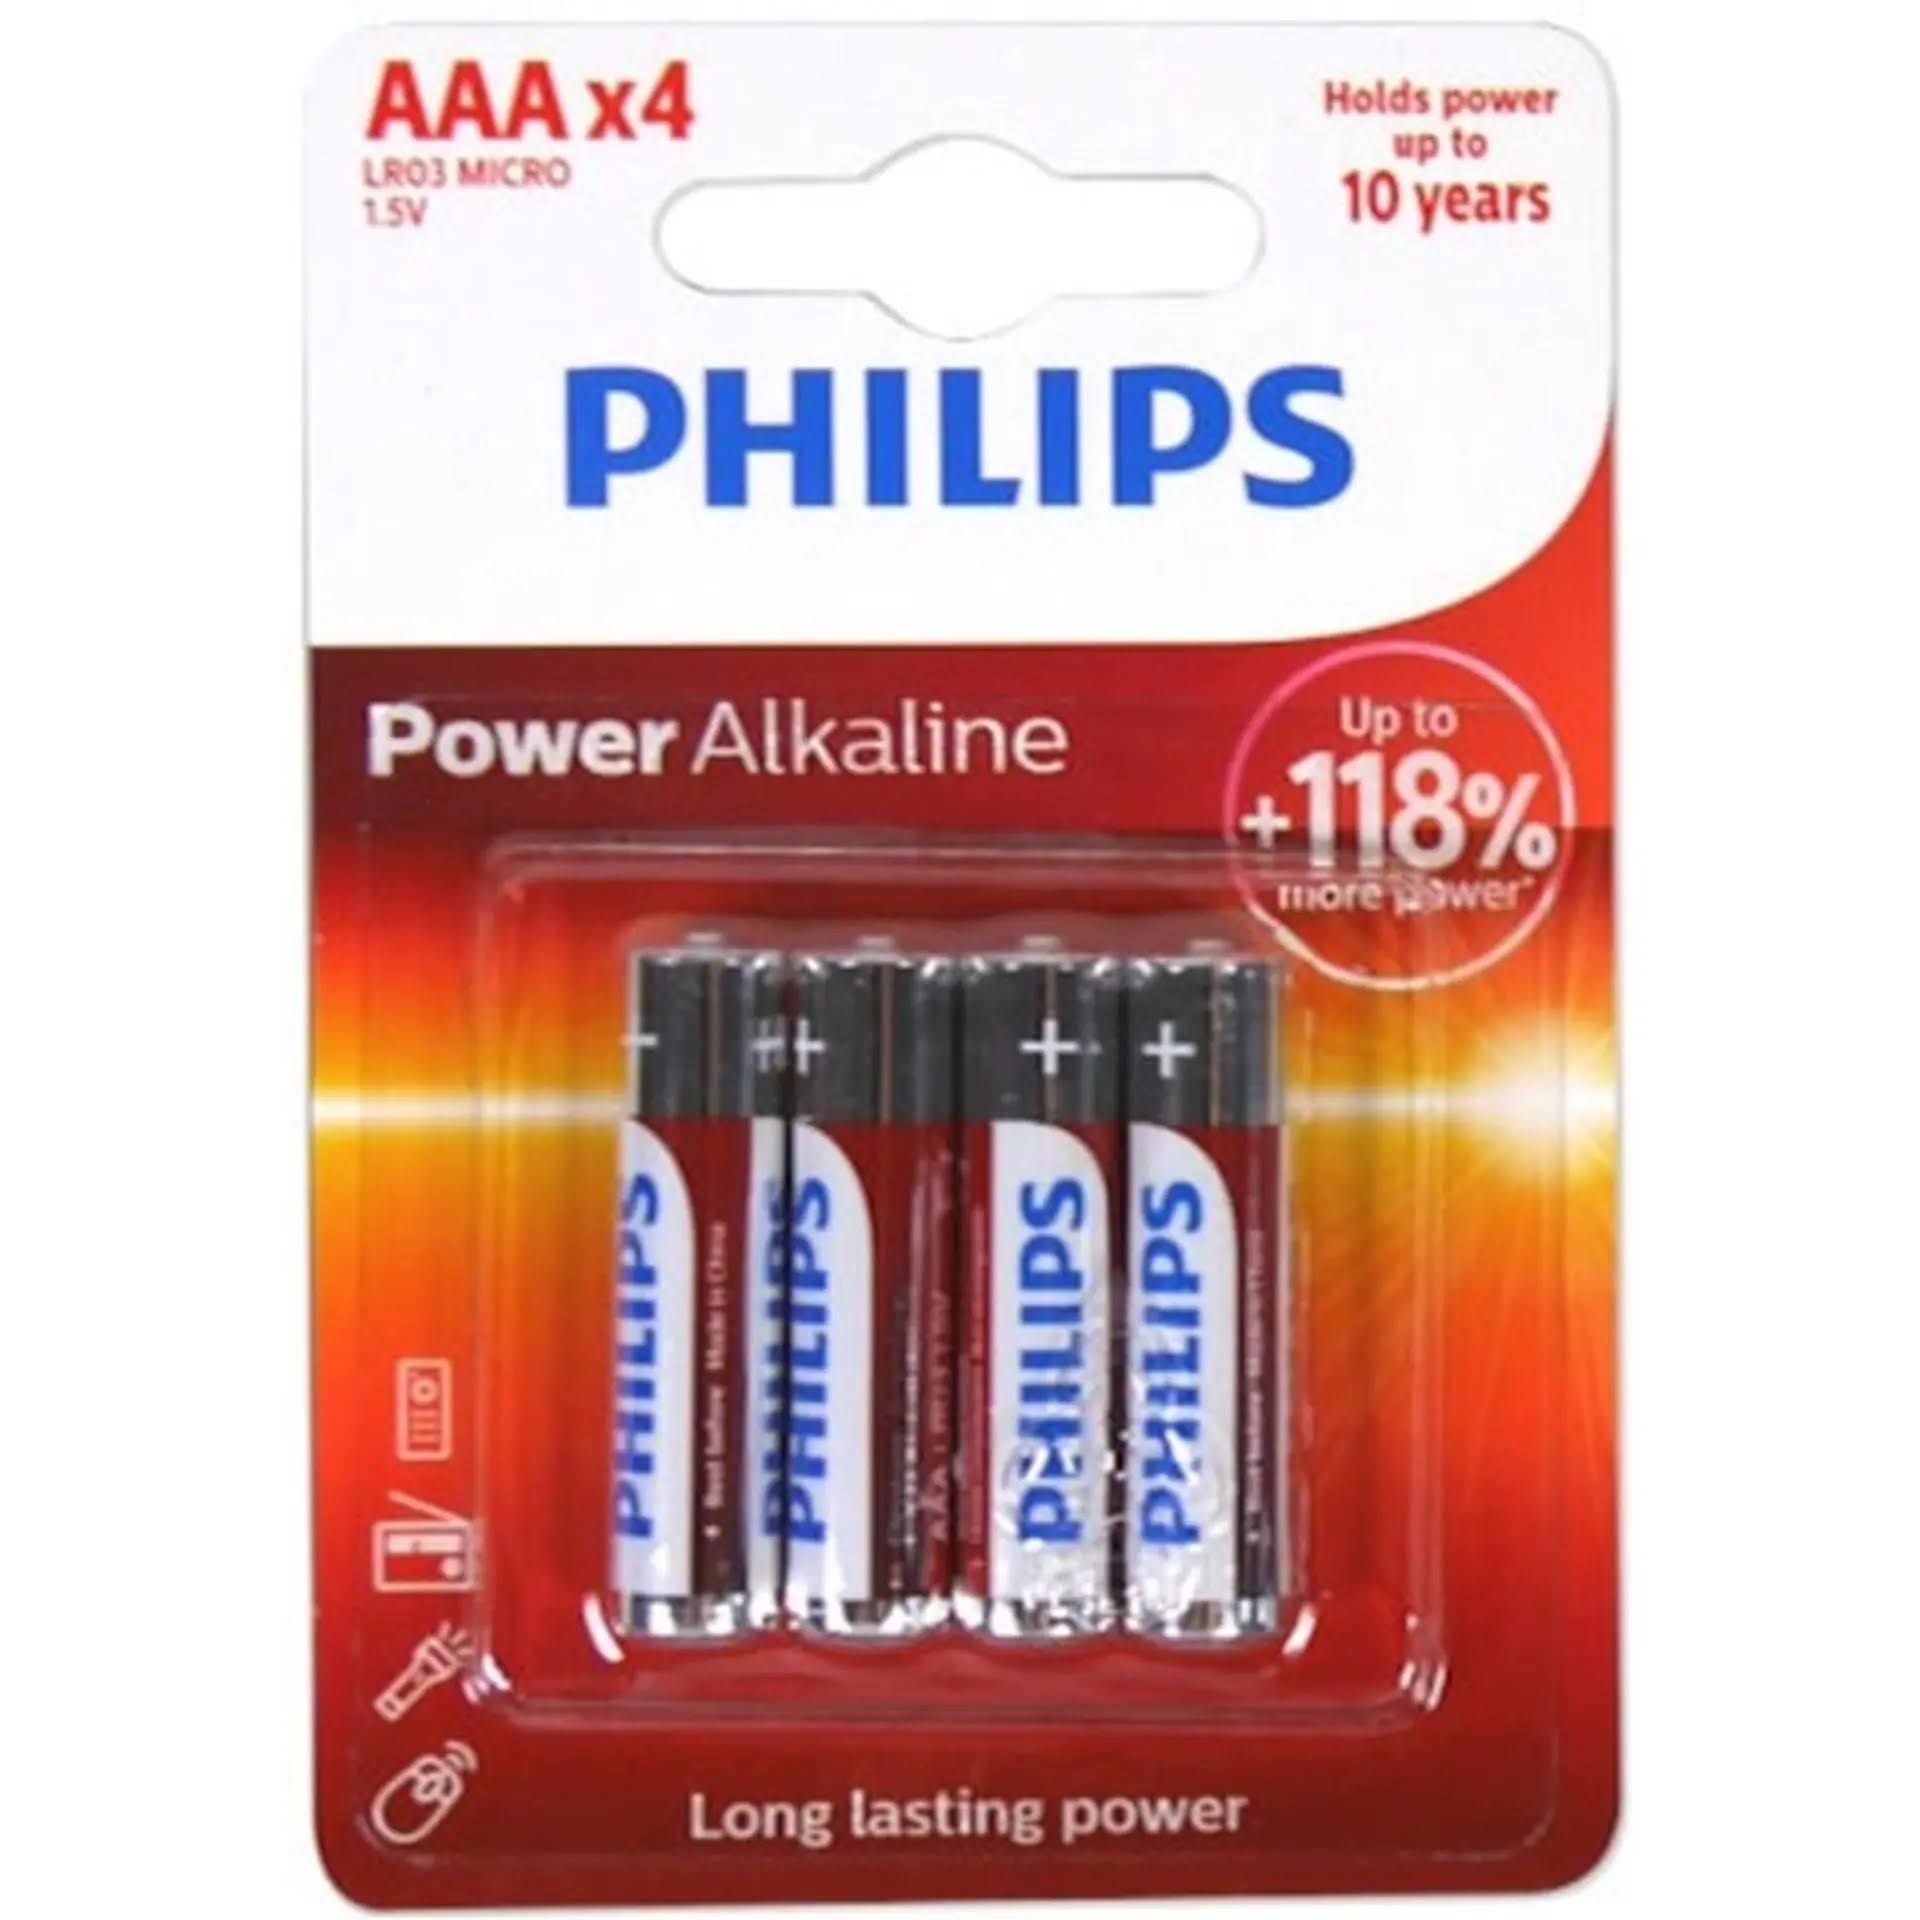 Philips Power Alkaline Battery LR03 AAA Cell X4